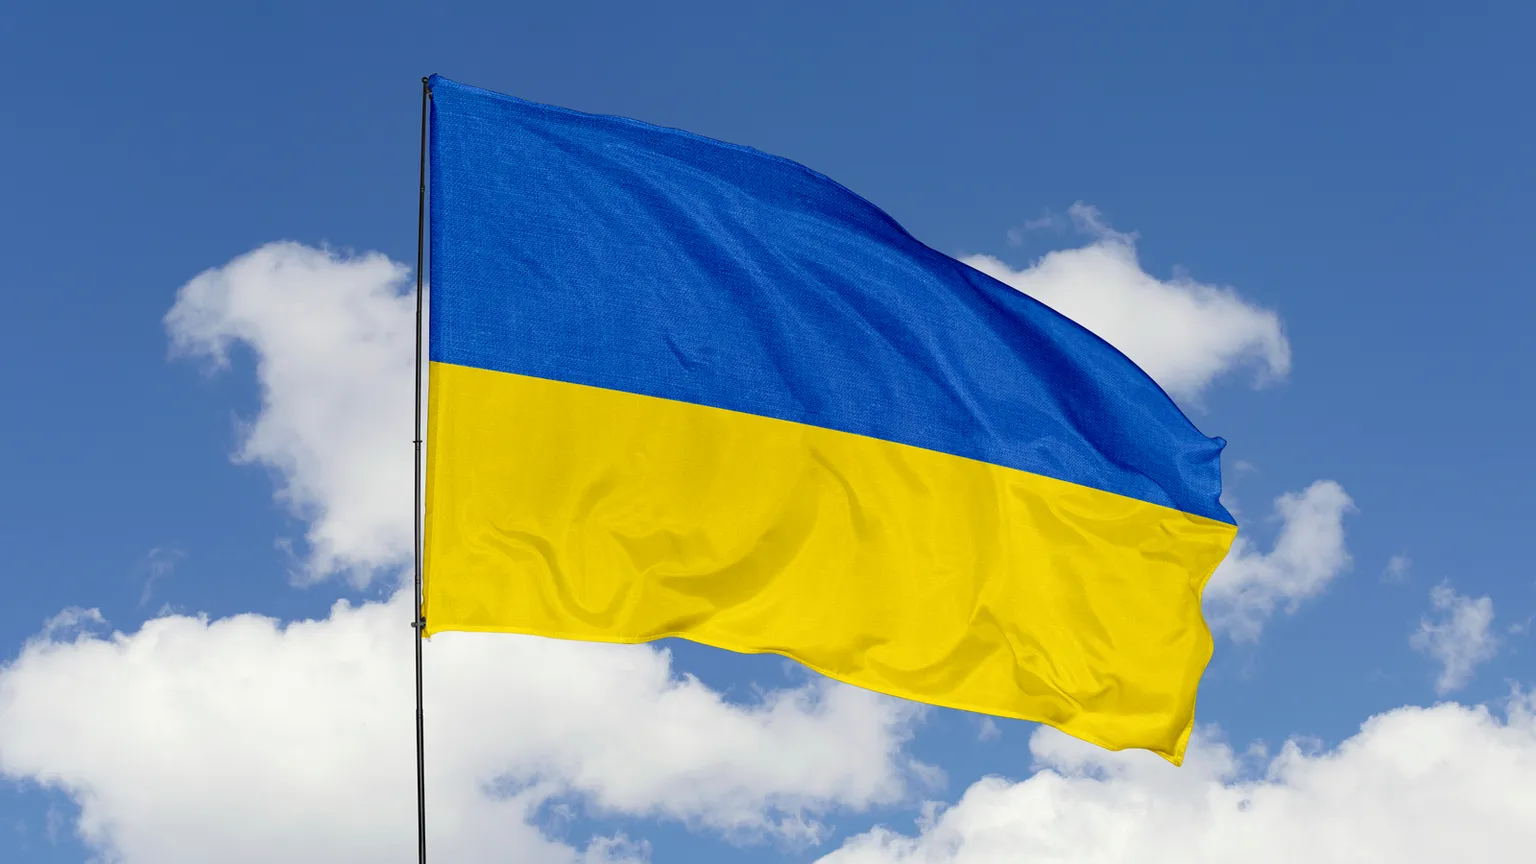 DAO Vende NFT de Bandera de Ucrania por $6.75 Millones